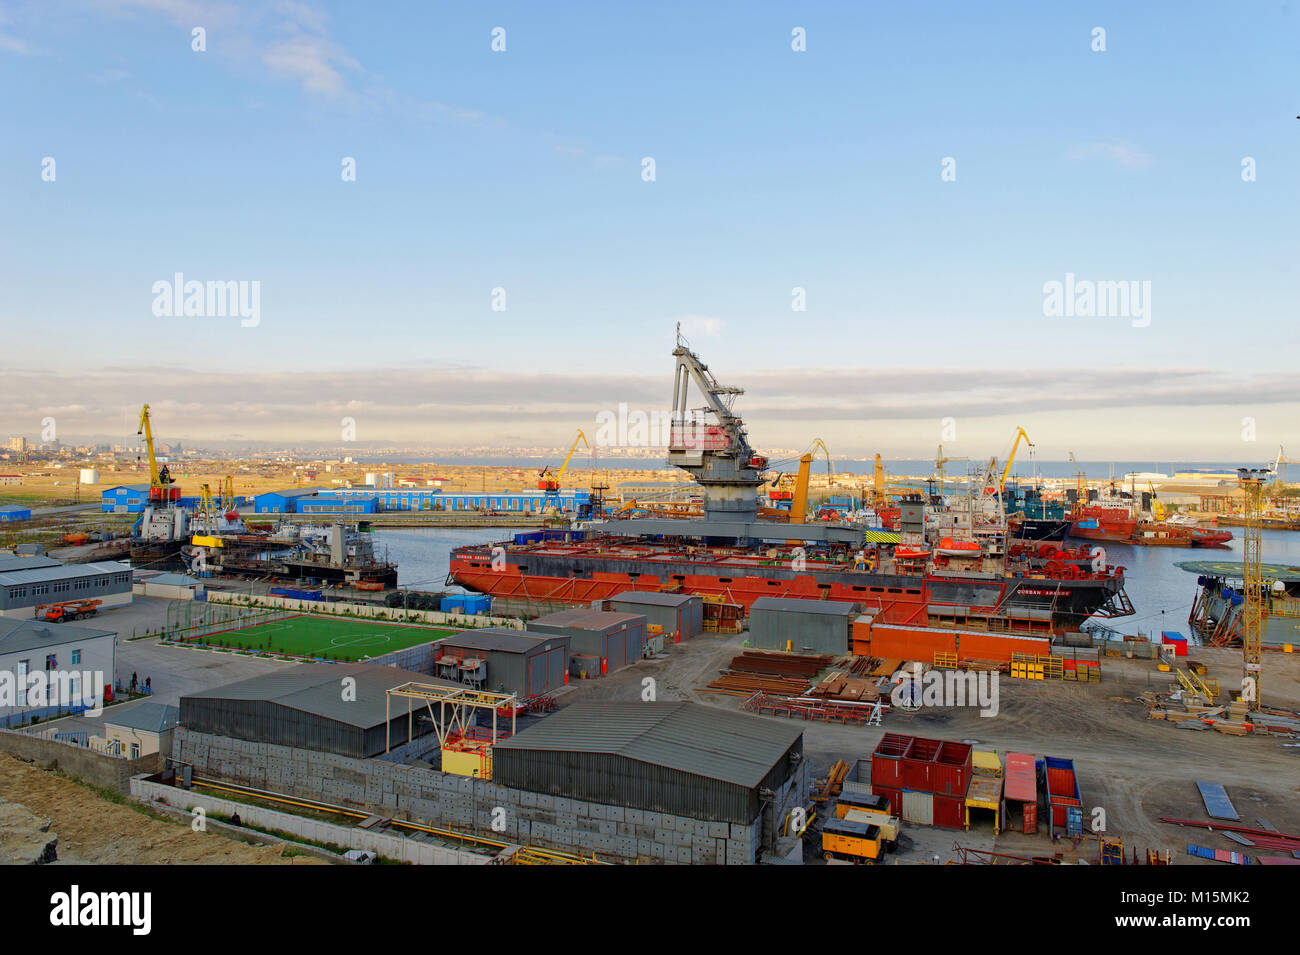 The South Bay Port, Baku, Azerbaijan Stock Photo - Alamy